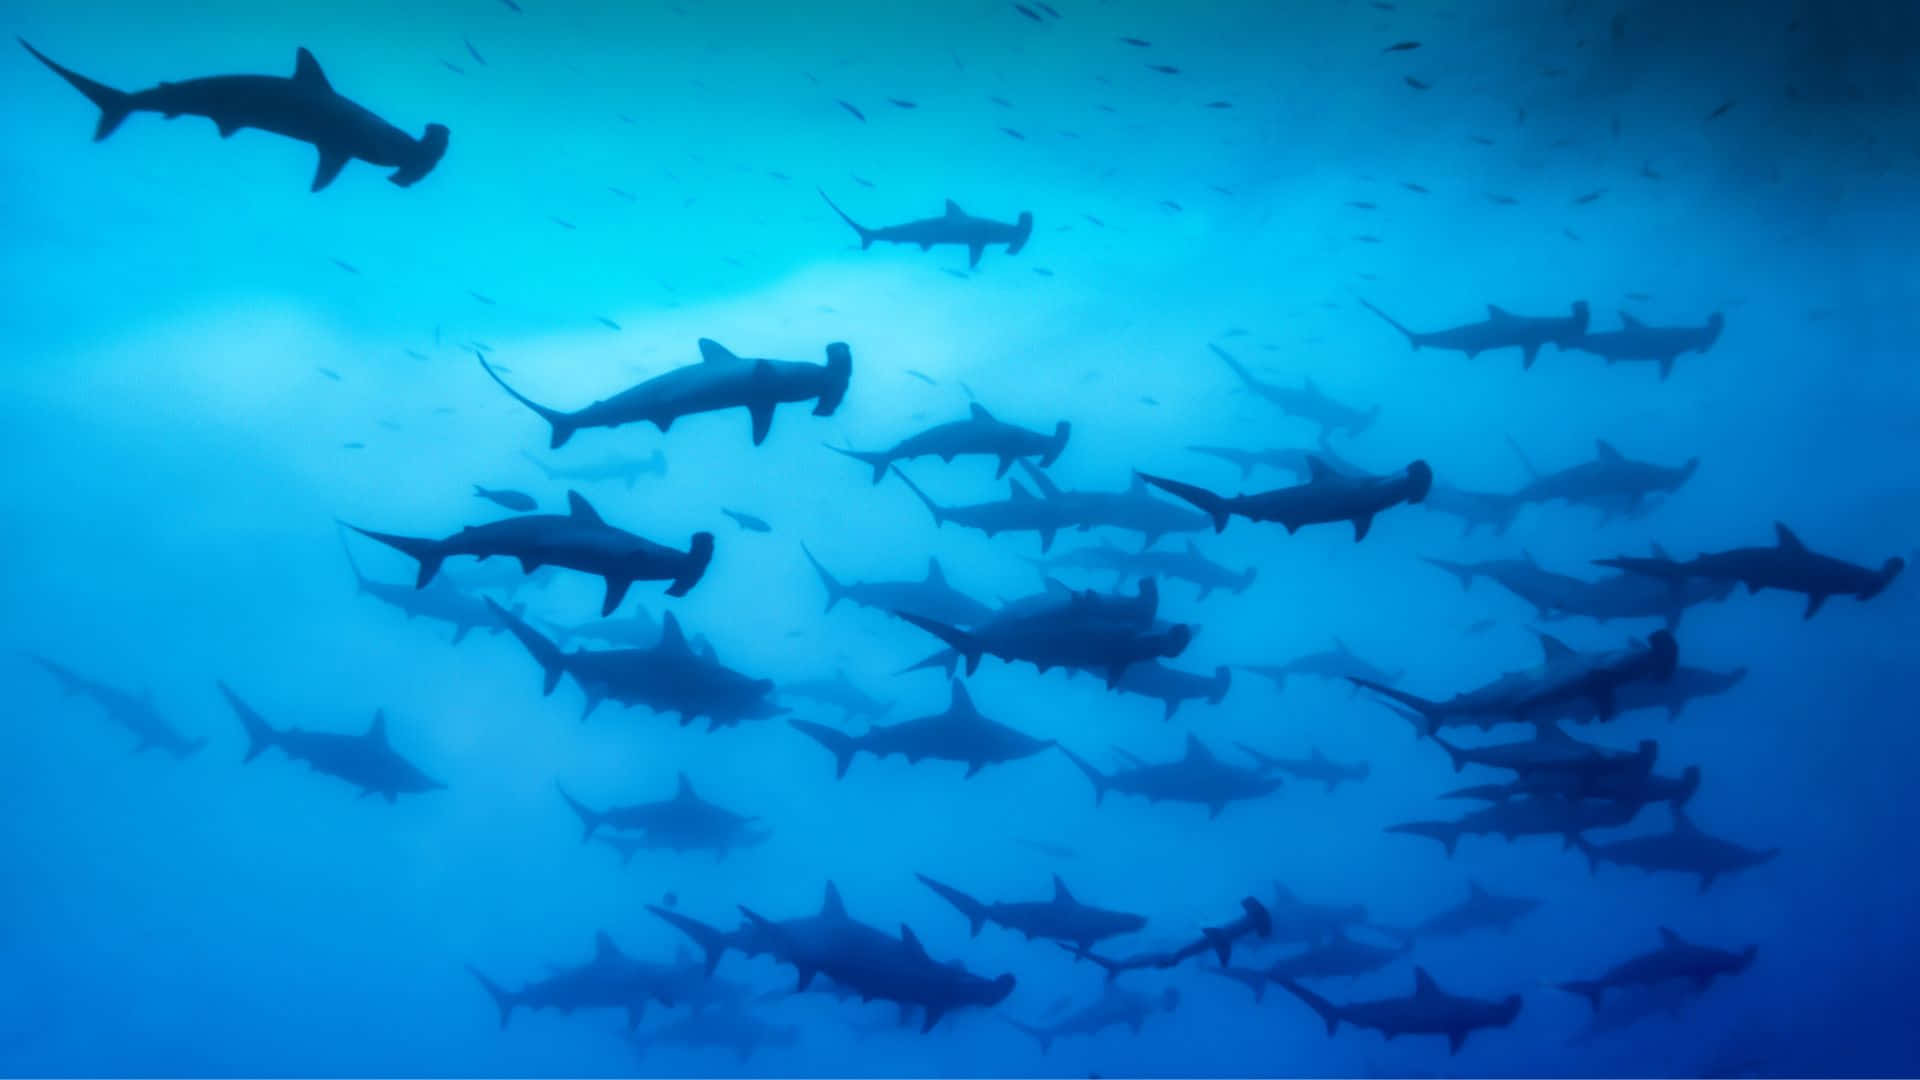 Caption: The Majestic Black Shark in Deep Sea Exploration Wallpaper